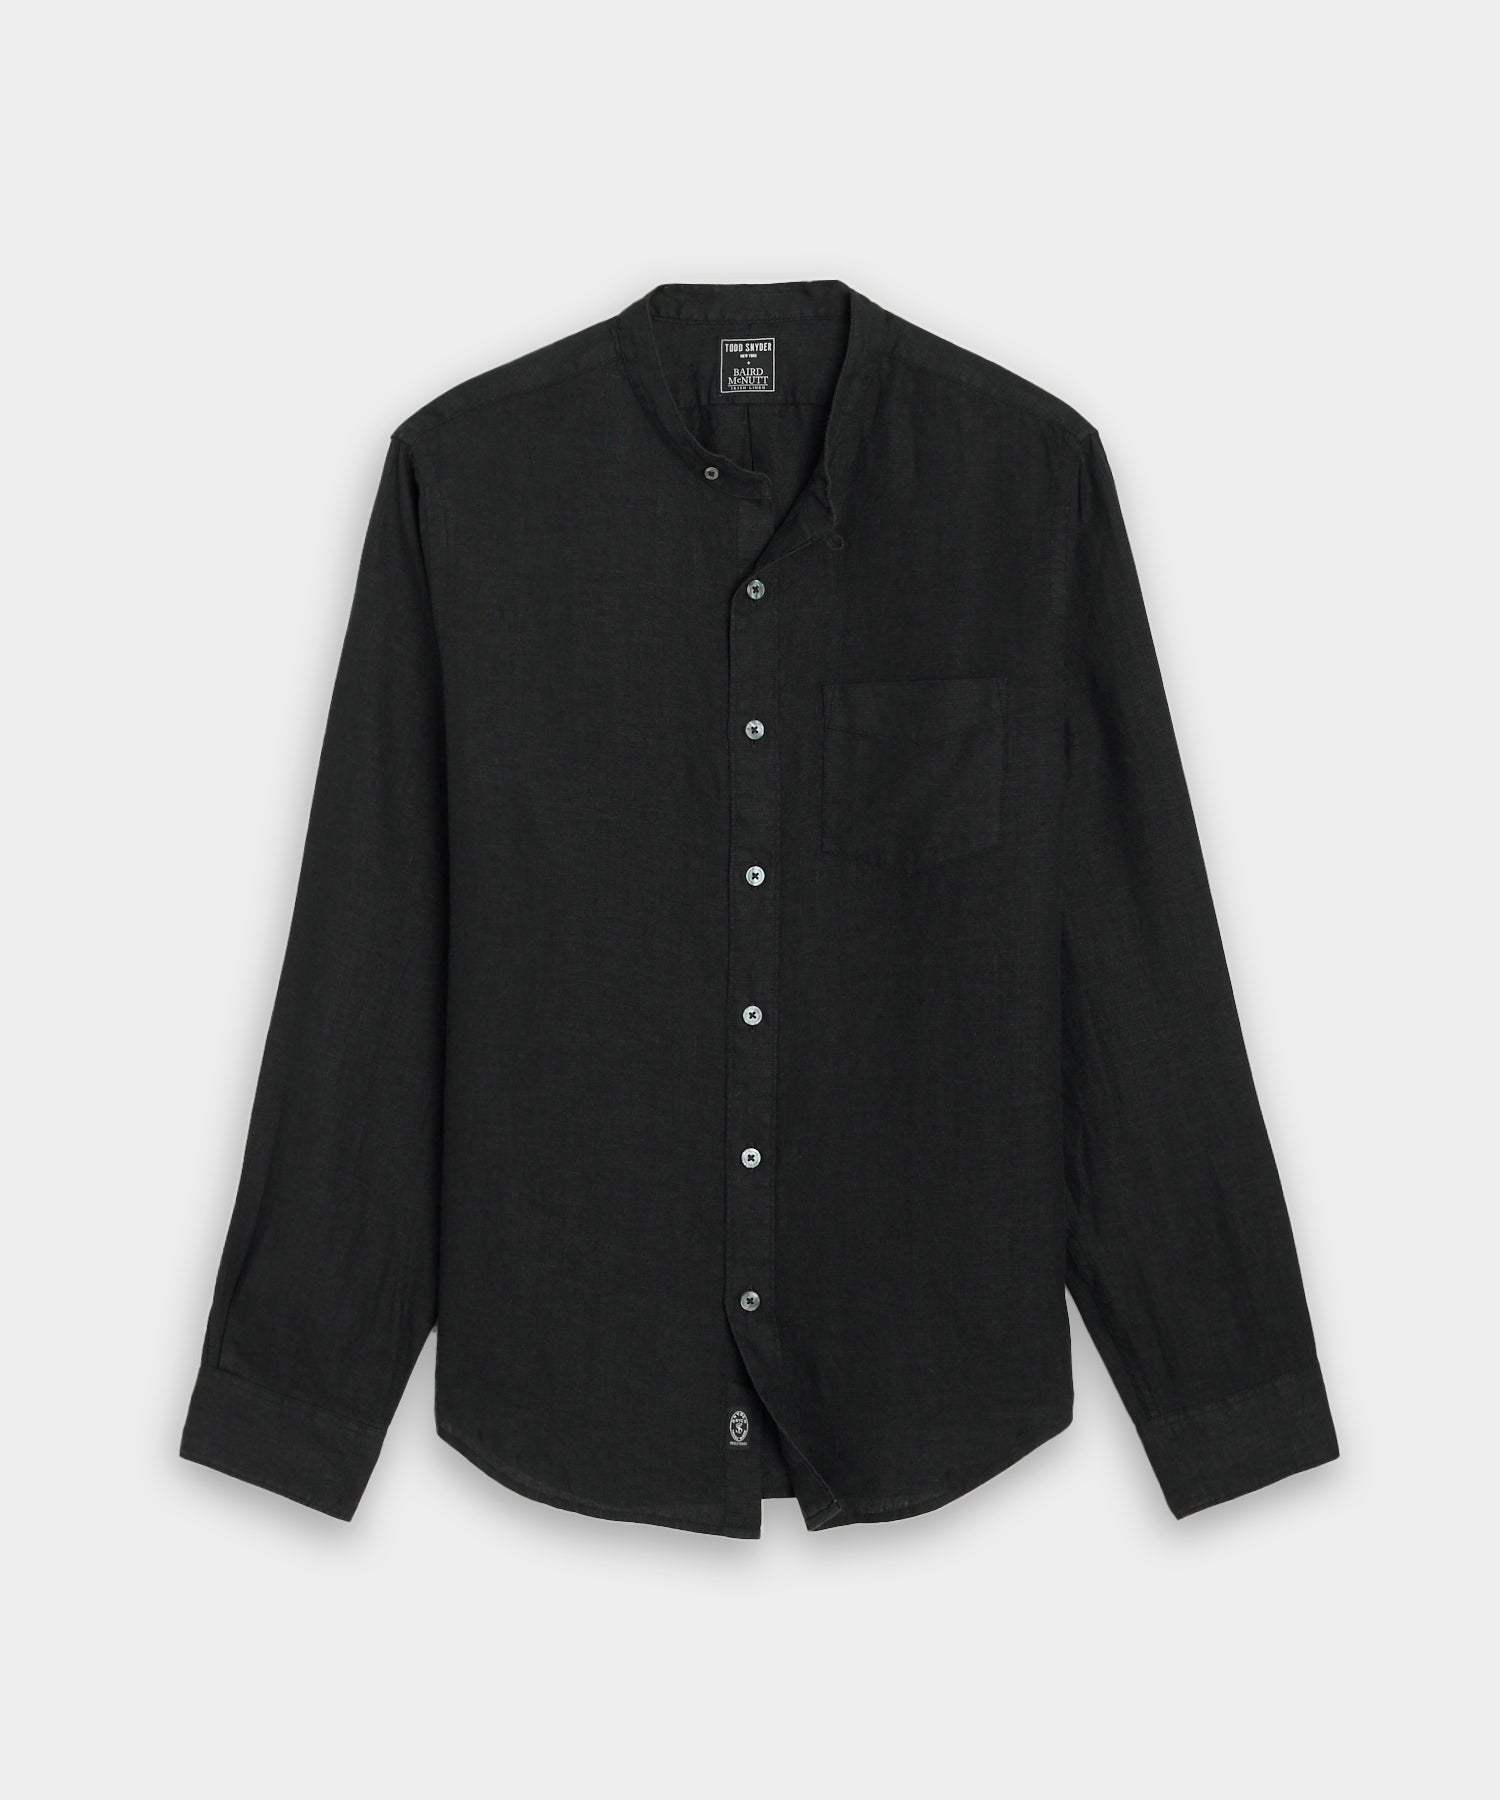 Sea Soft Linen Band Collar Long Sleeve Shirt in Black